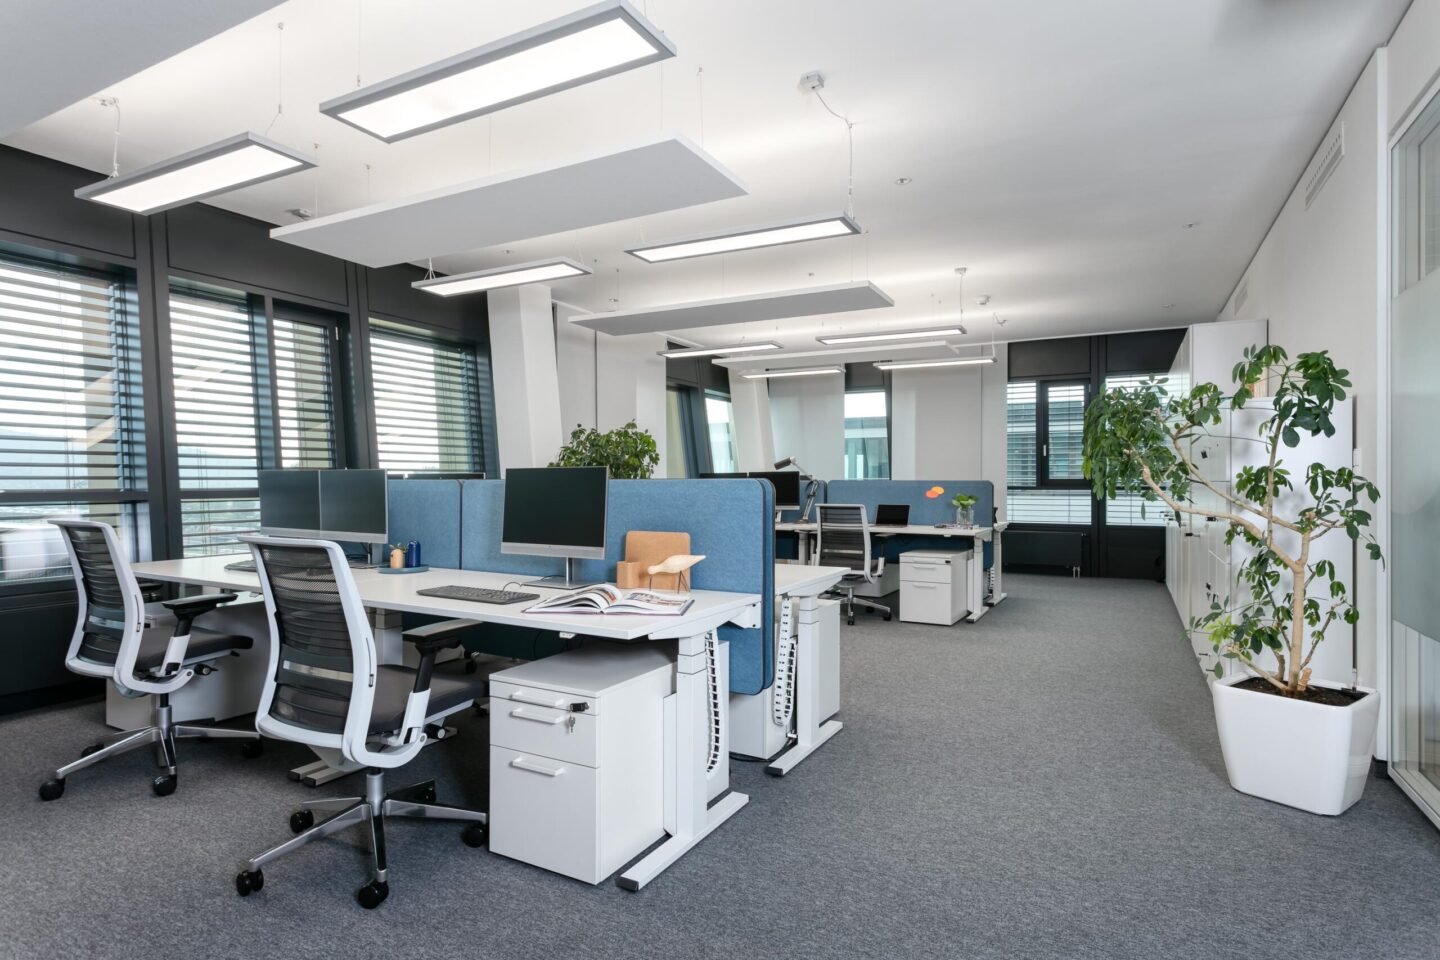 Alcon Freiburg im Breisgau │ Open spaces office │ modern working environments │ electrically height-adjustable desks